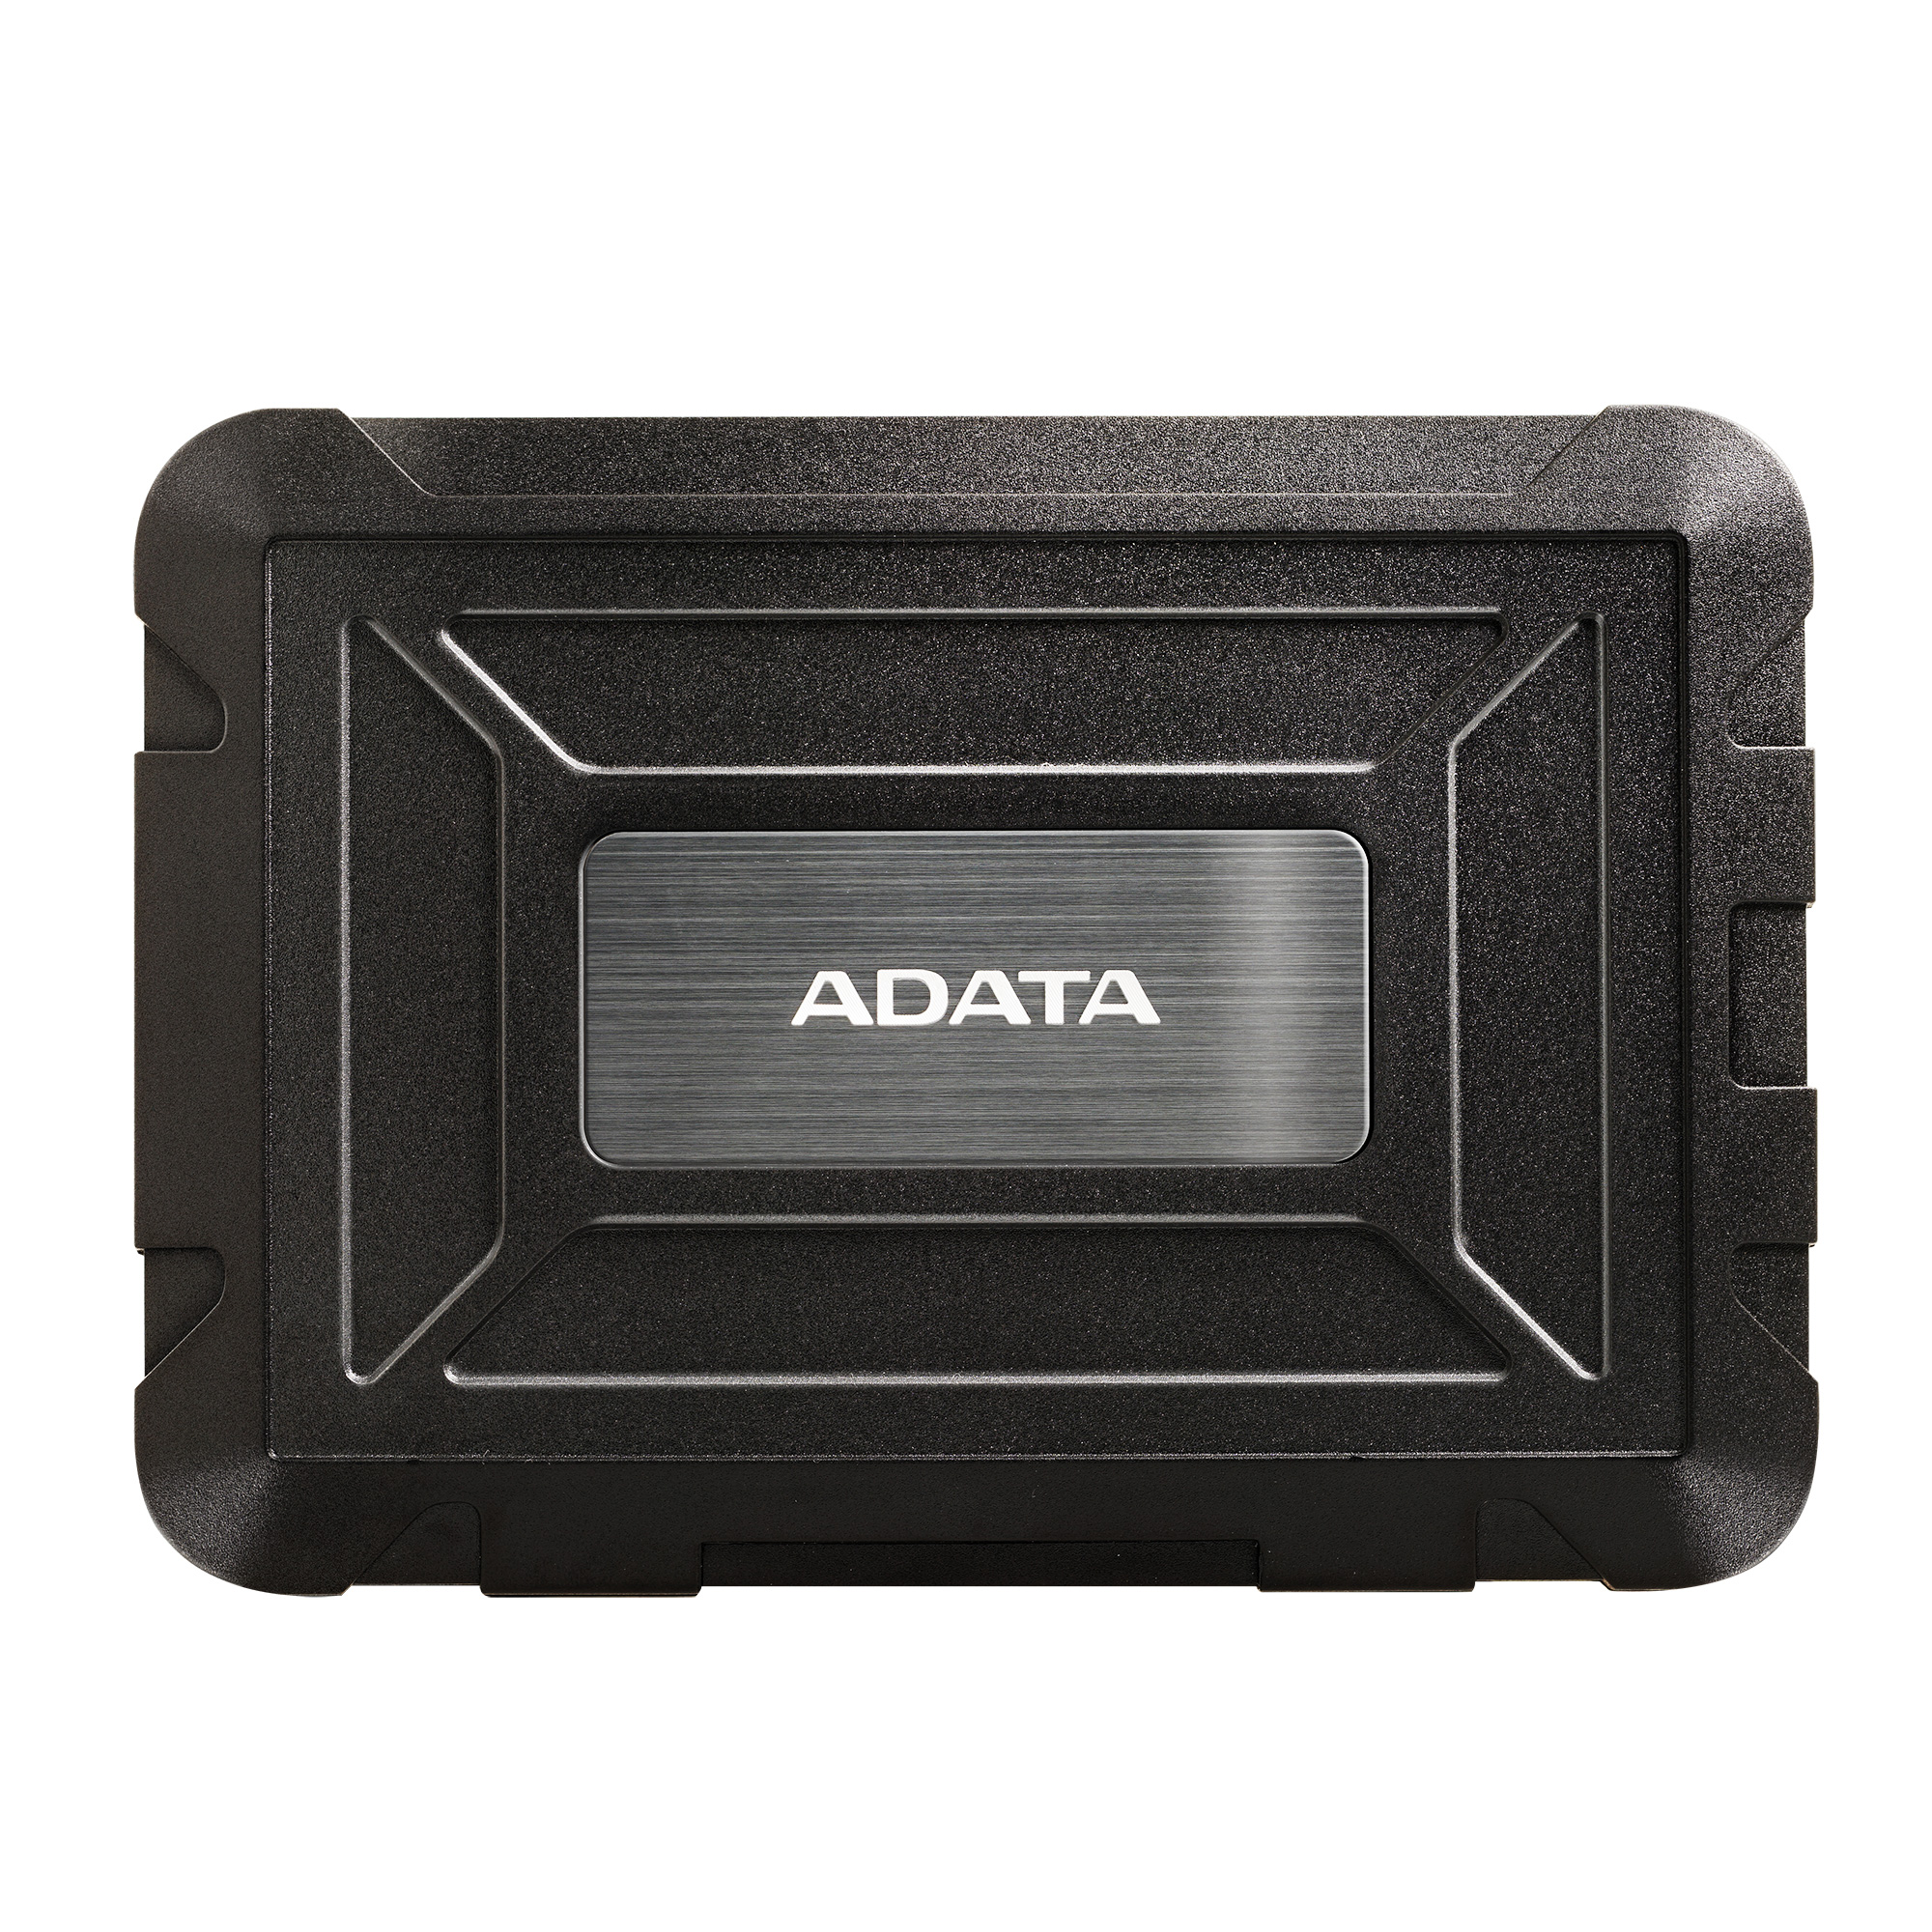 ADATA lanseaza carcasa ED600 pentru hard drive-uri externe Instalare usoara, portabilitate sigura.